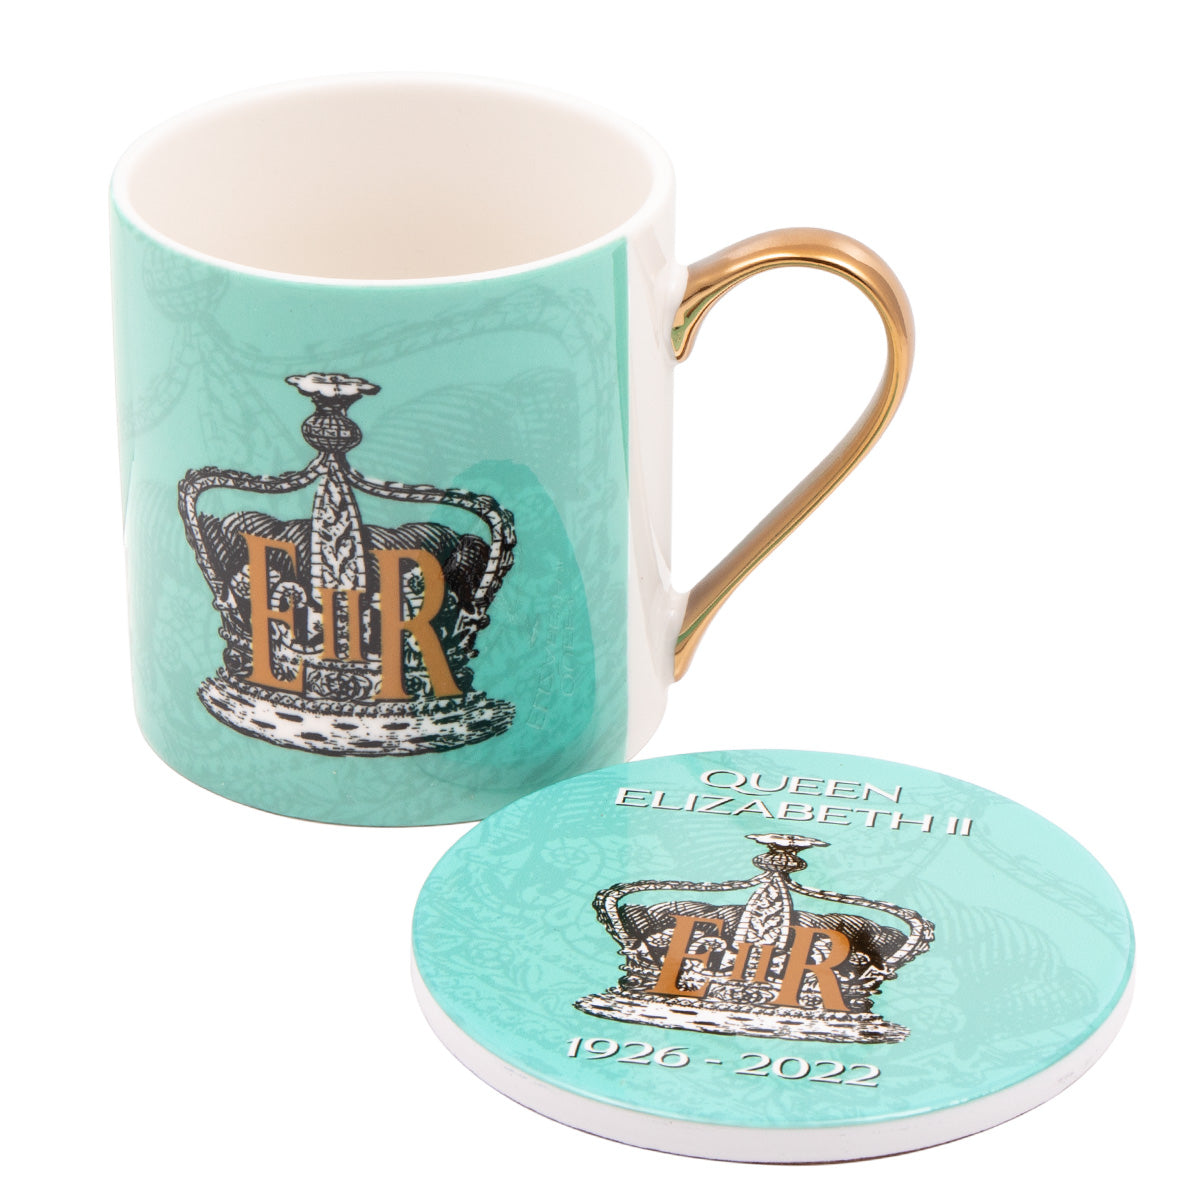 Queen Elizabeth II Royal Accession Ceramic Coaster and Mug